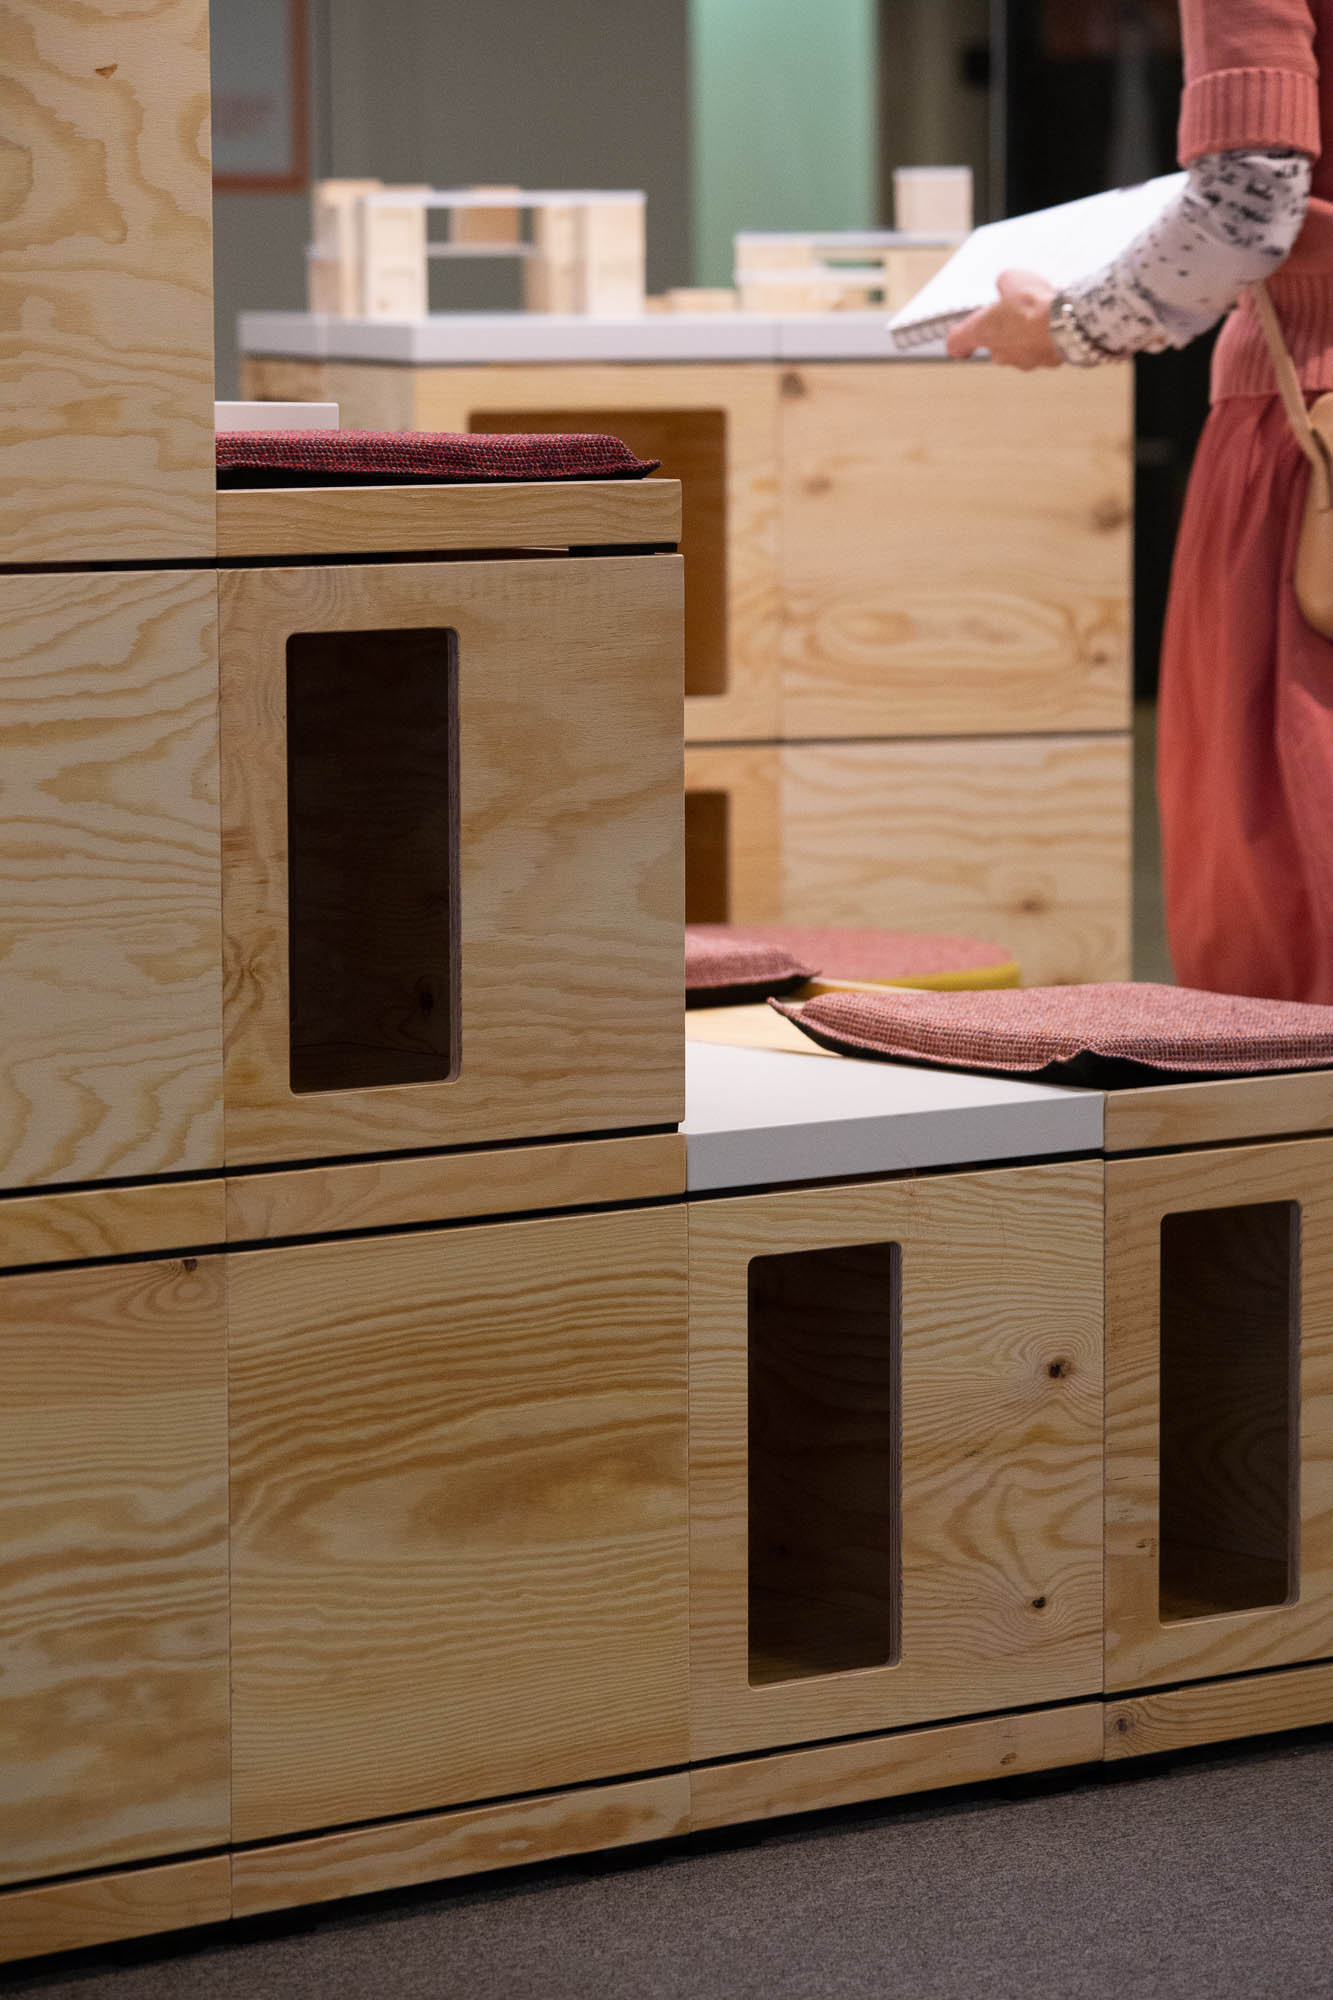 Teknion Bene Box - Best of NeoCon - Furniture for Collaboration